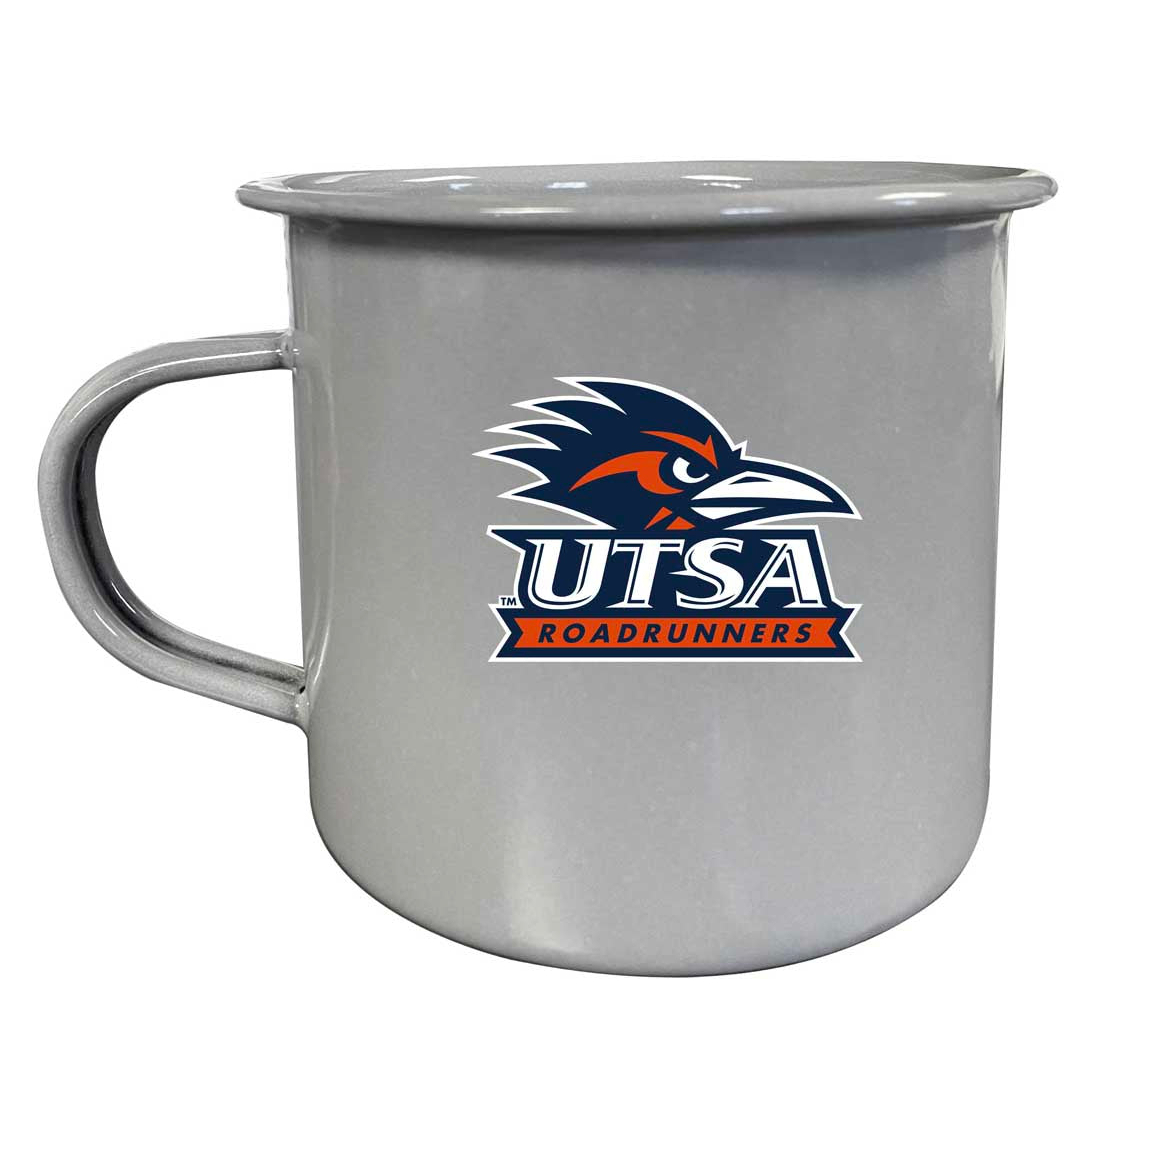 UTSA Road Runners Tin Camper Coffee Mug - Choose Your Color - Navy